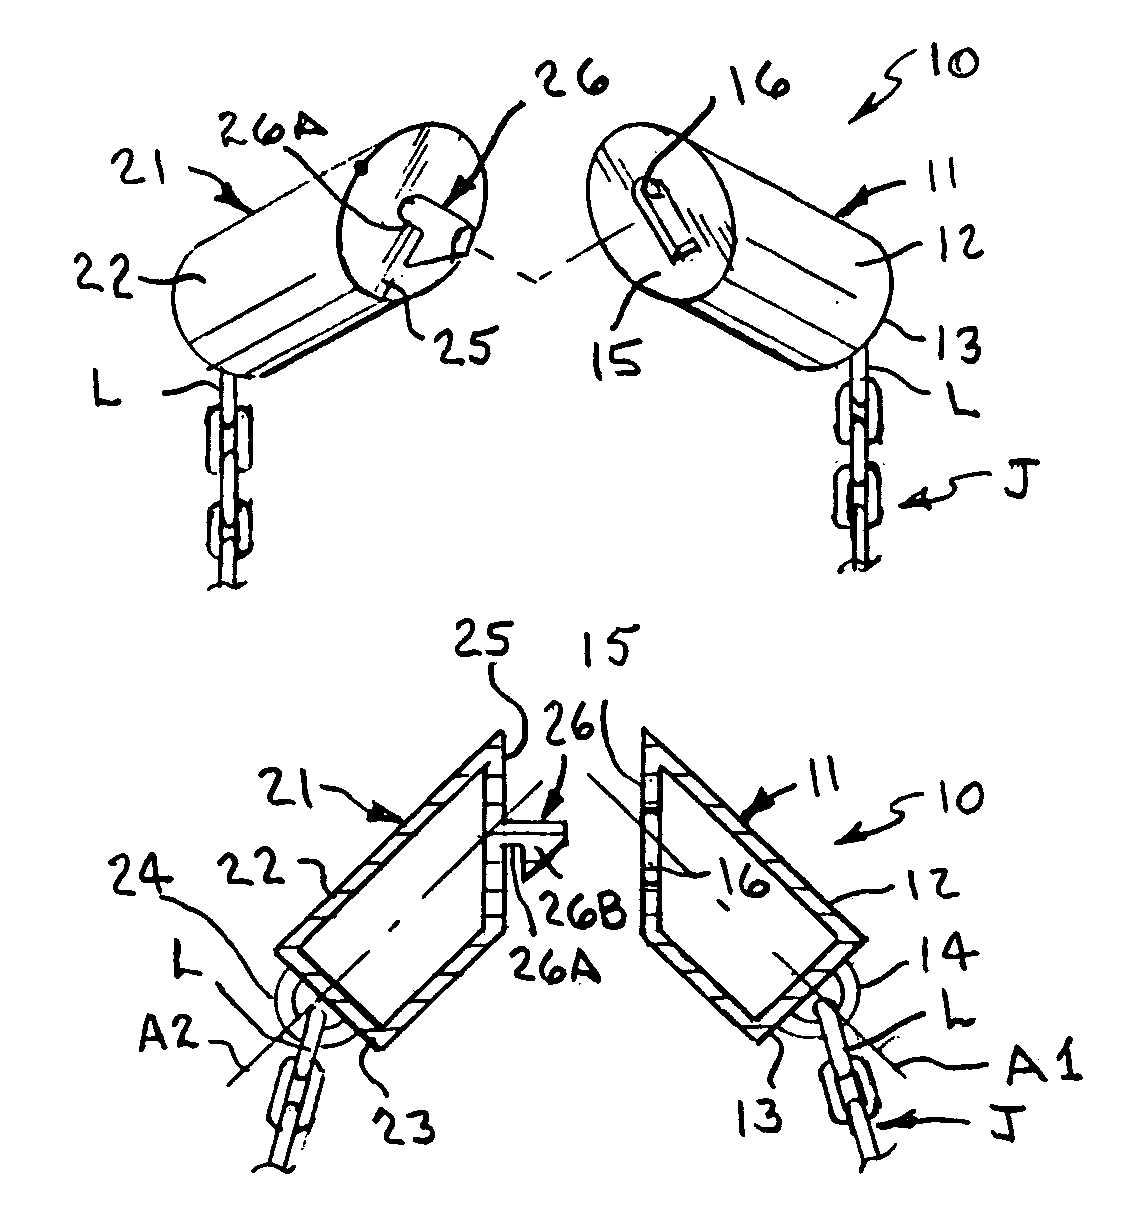 Twist lock clasp and coupling method